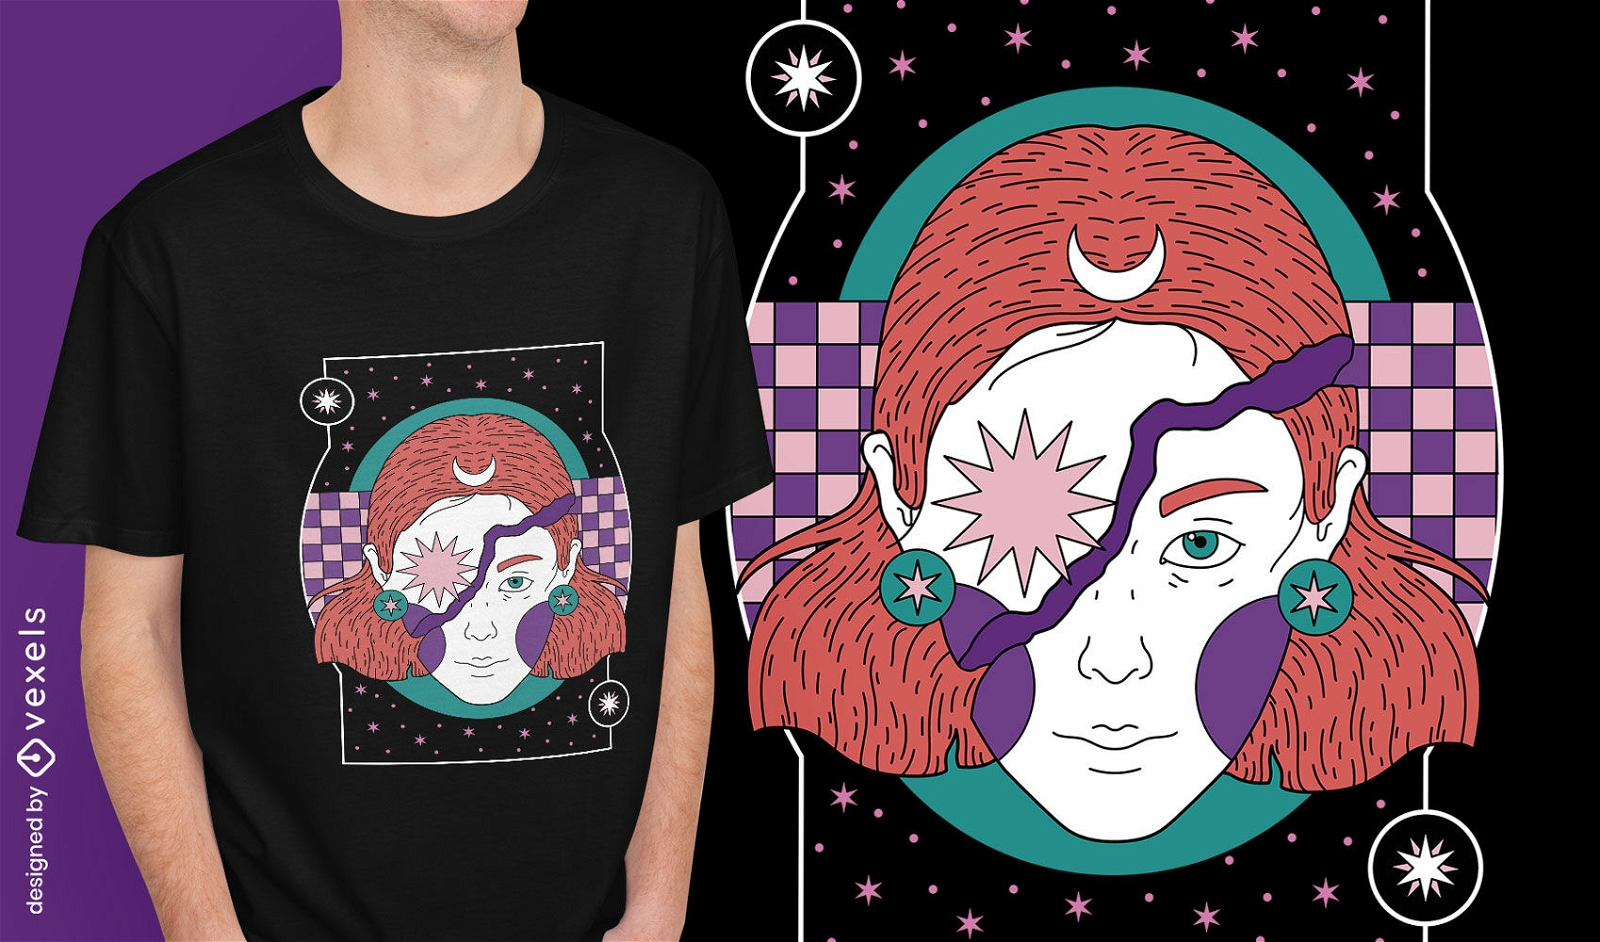 Mystic night woman t-shirt design